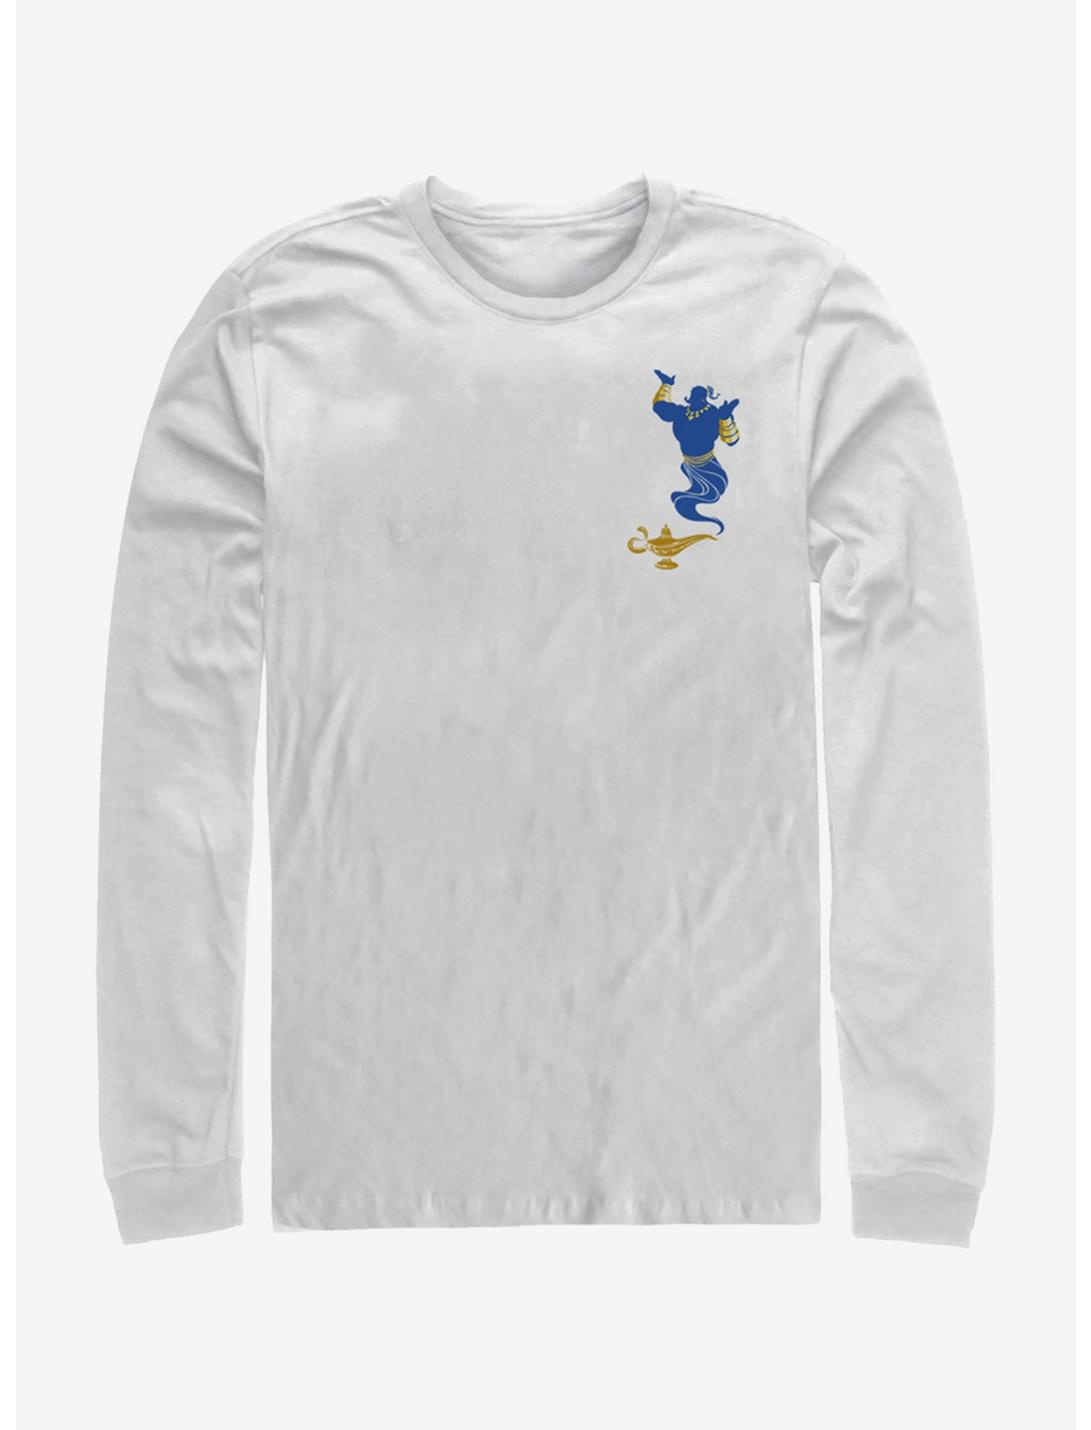 Disney Aladdin 2019 Pocket Lamp Long Sleeve T-Shirt, WHITE, hi-res